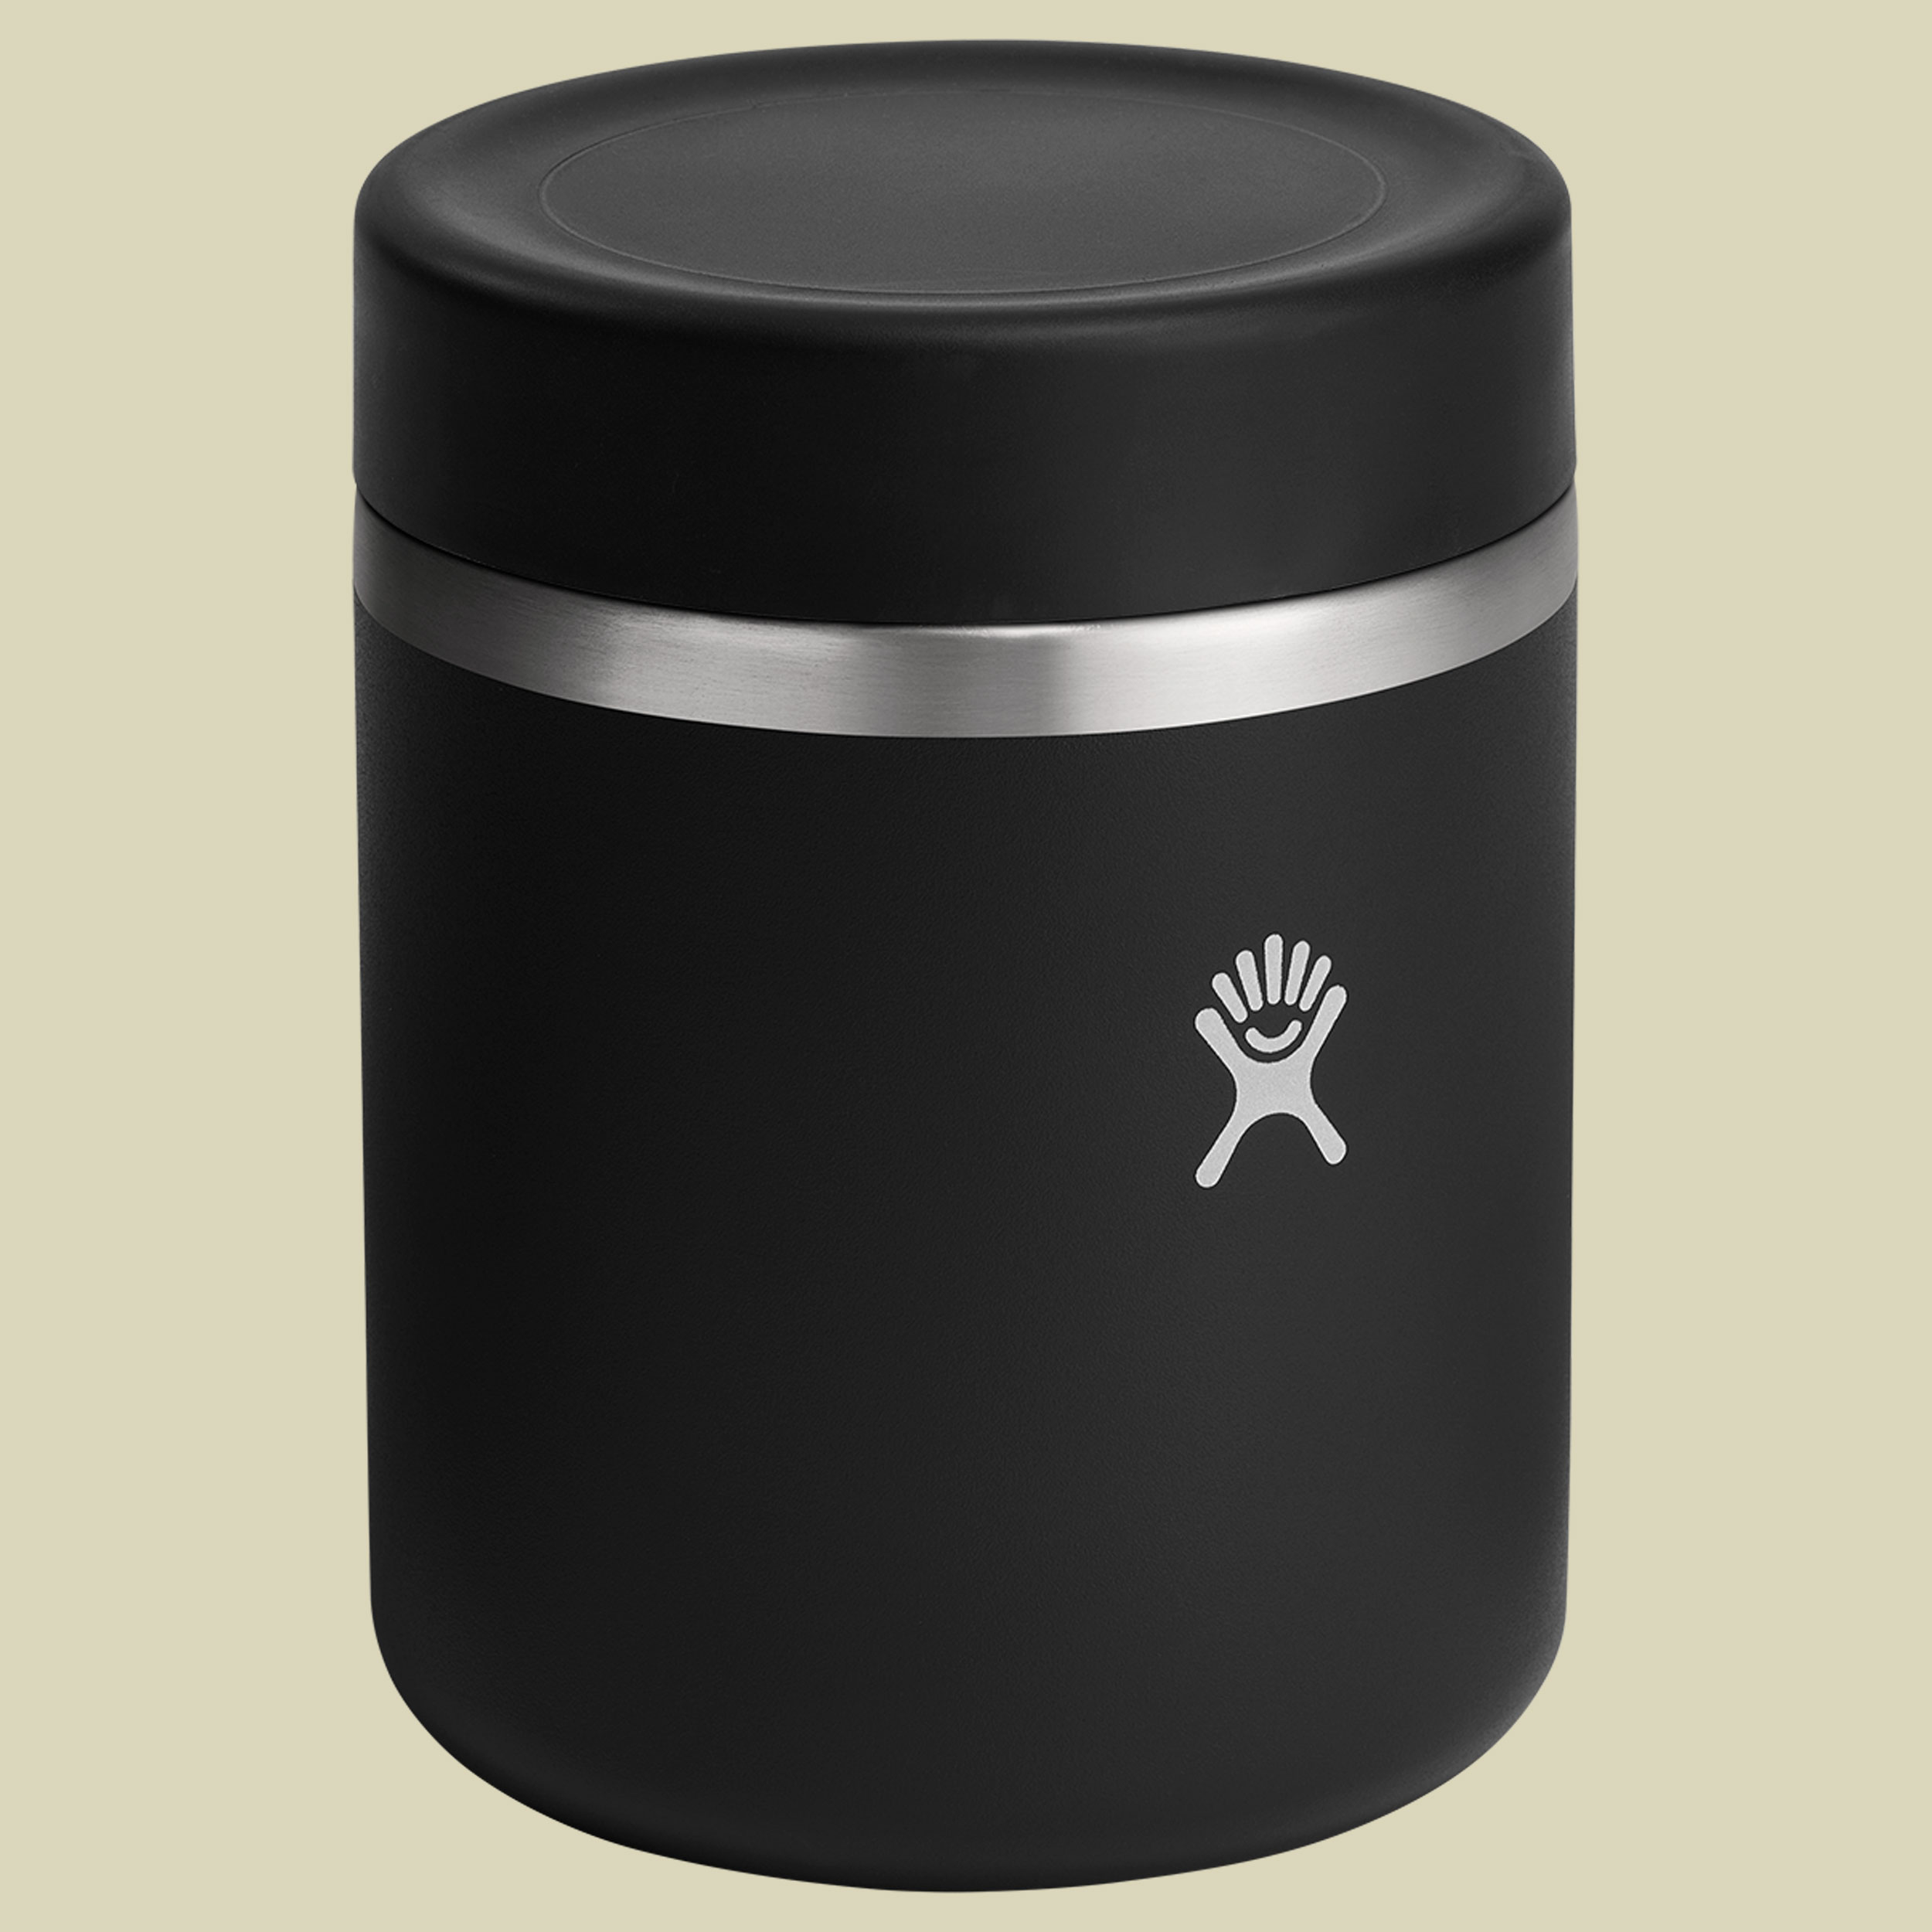 28 oz Insulated Food Jar schwarz 828 - Farbe black